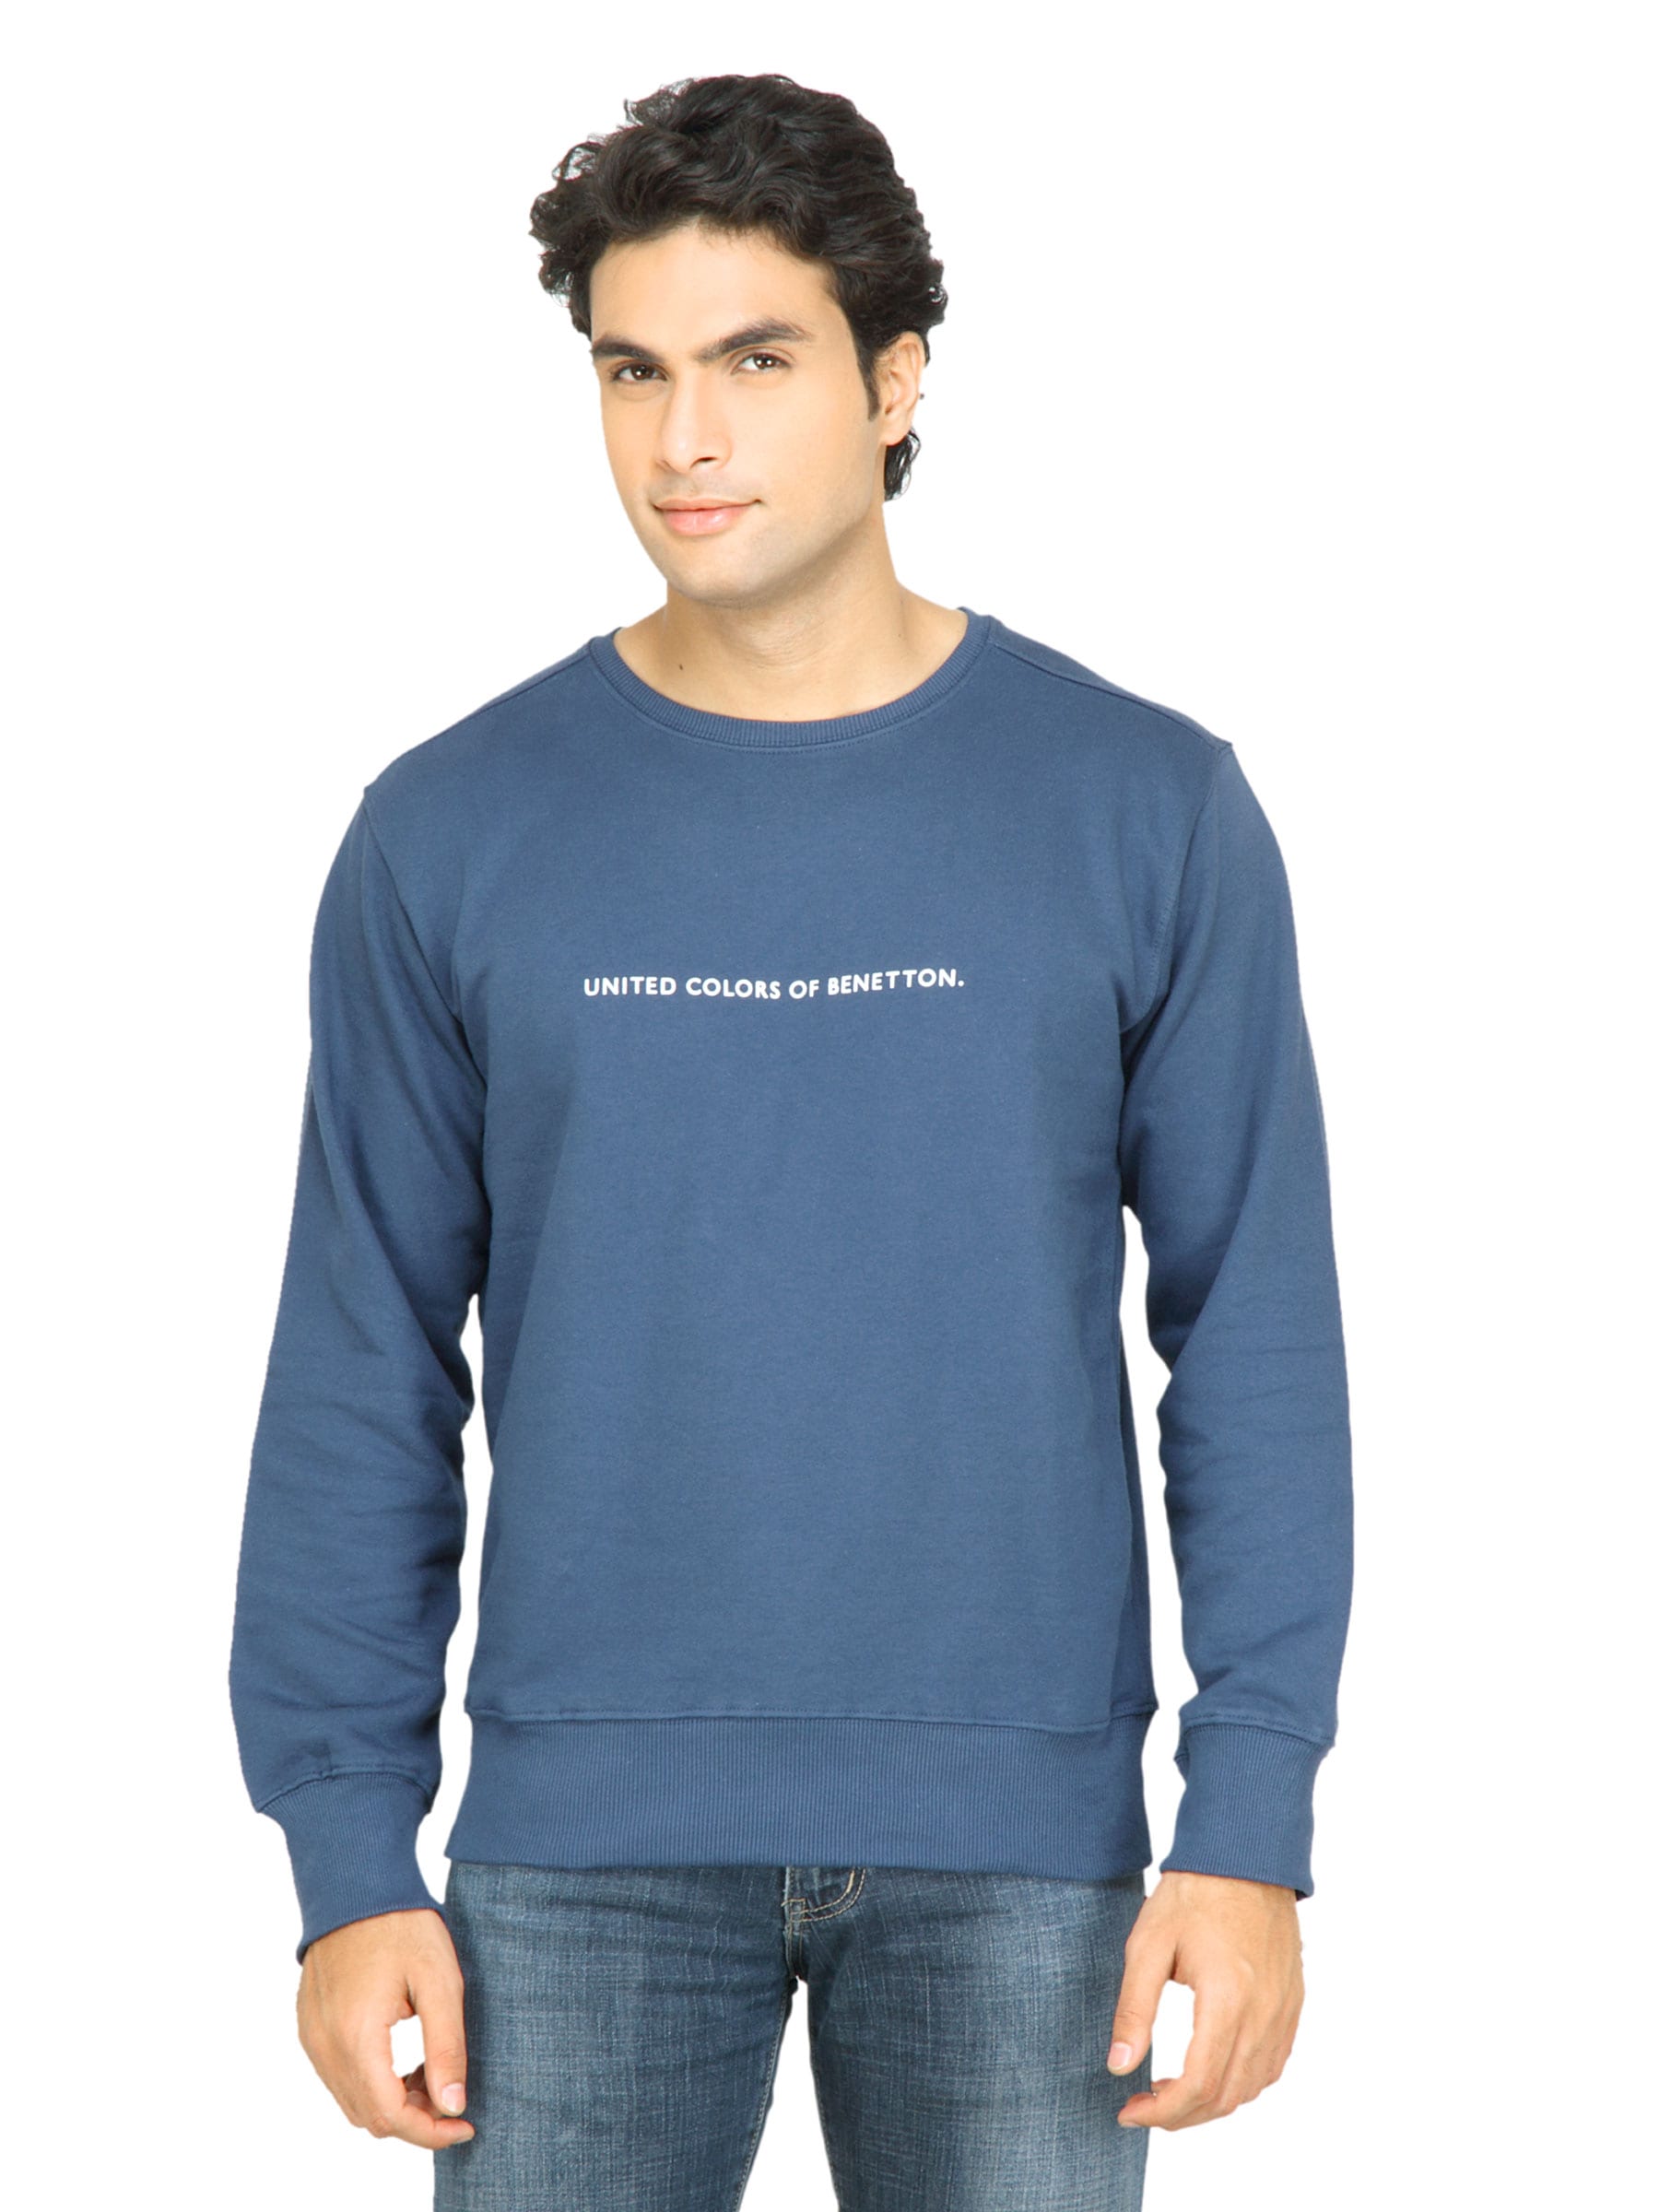 United Colors of Benetton Men Solid Blue Sweatshirt